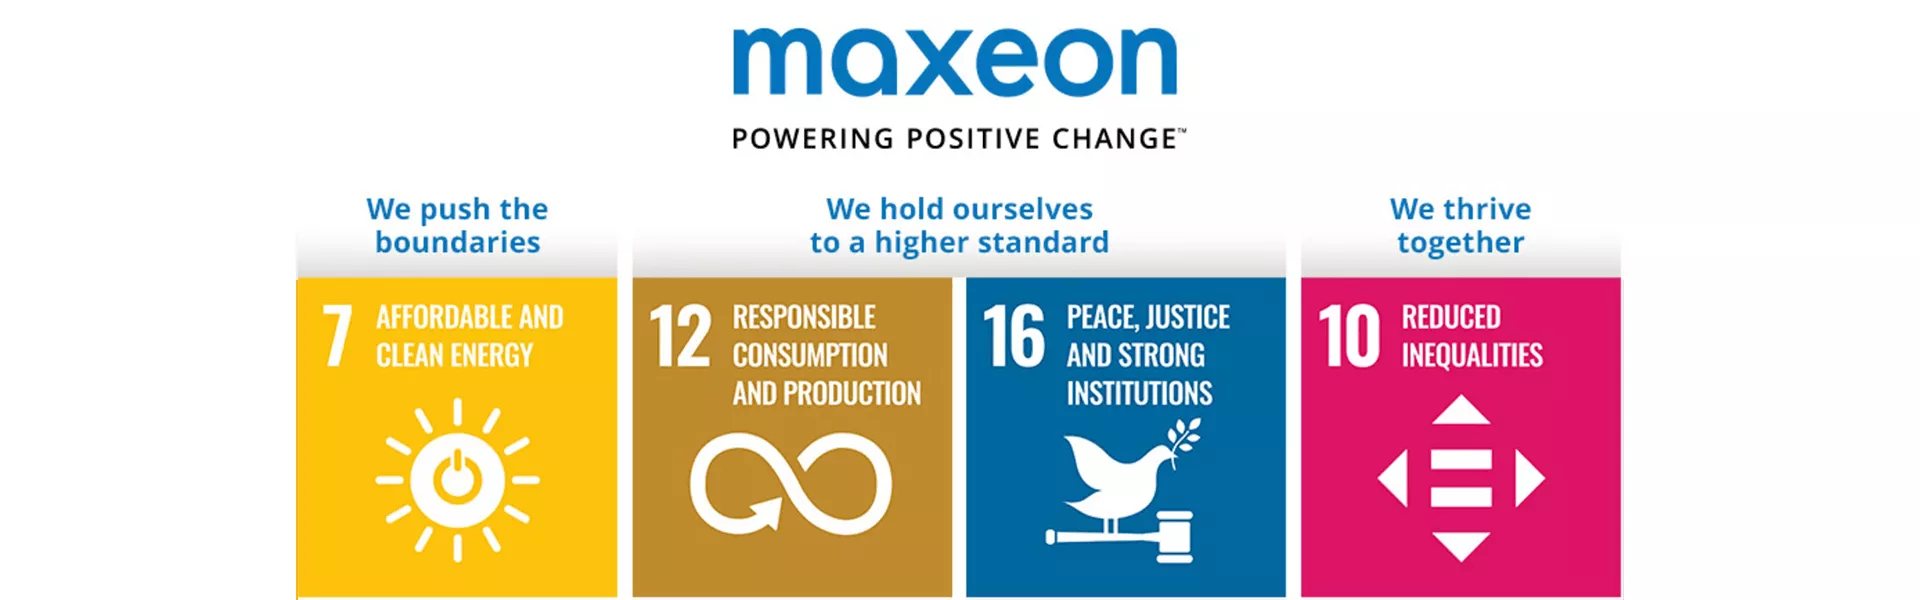 Maxeon UN Sustainable Development Goals